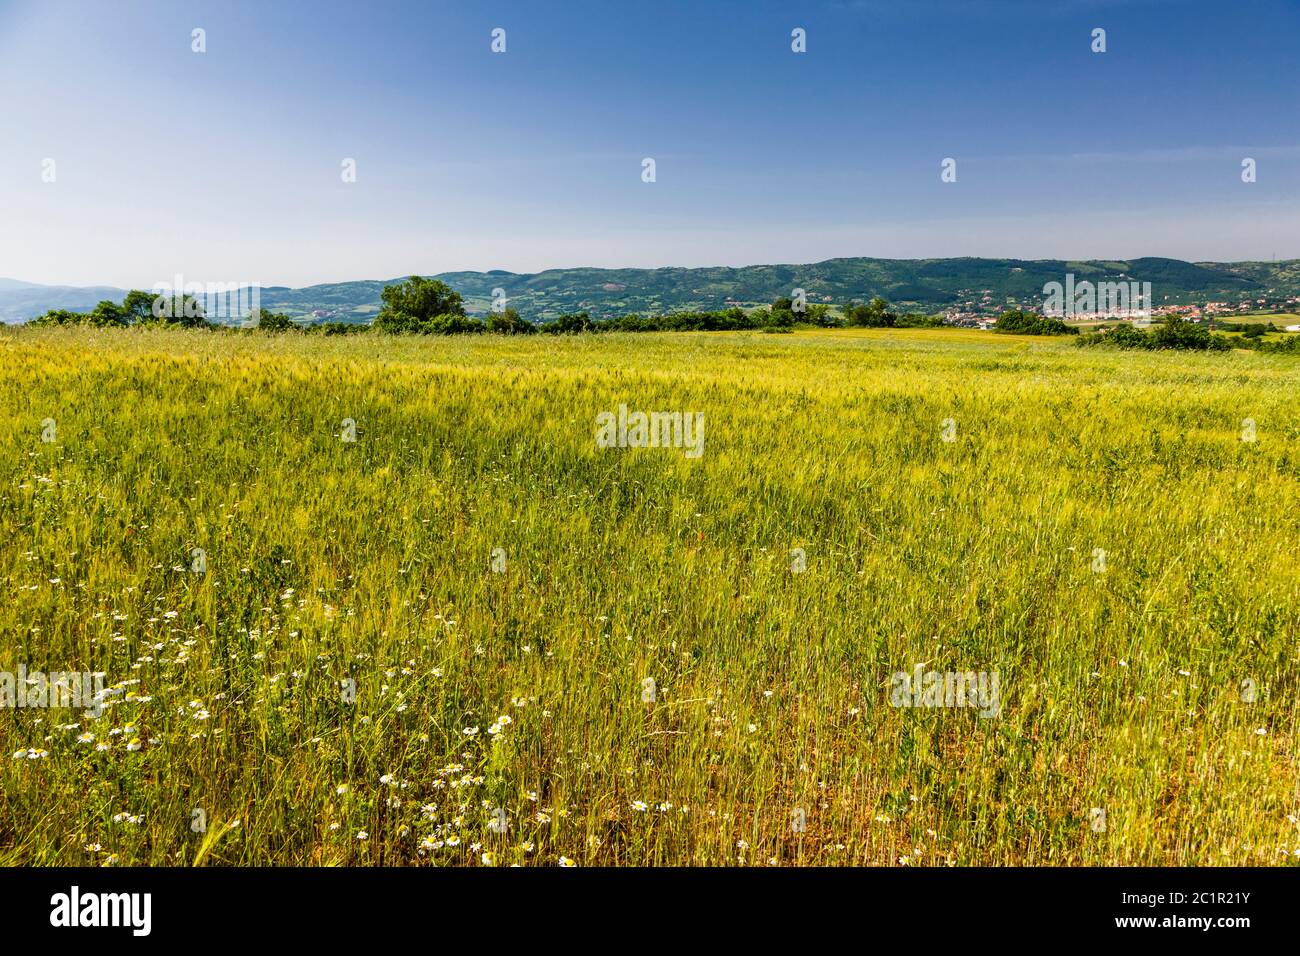 Landscape of Macedonia region, Wheat fields of Macedonia region, Suburb of Serres,Central Macedonia,Greece,Europe Stock Photo